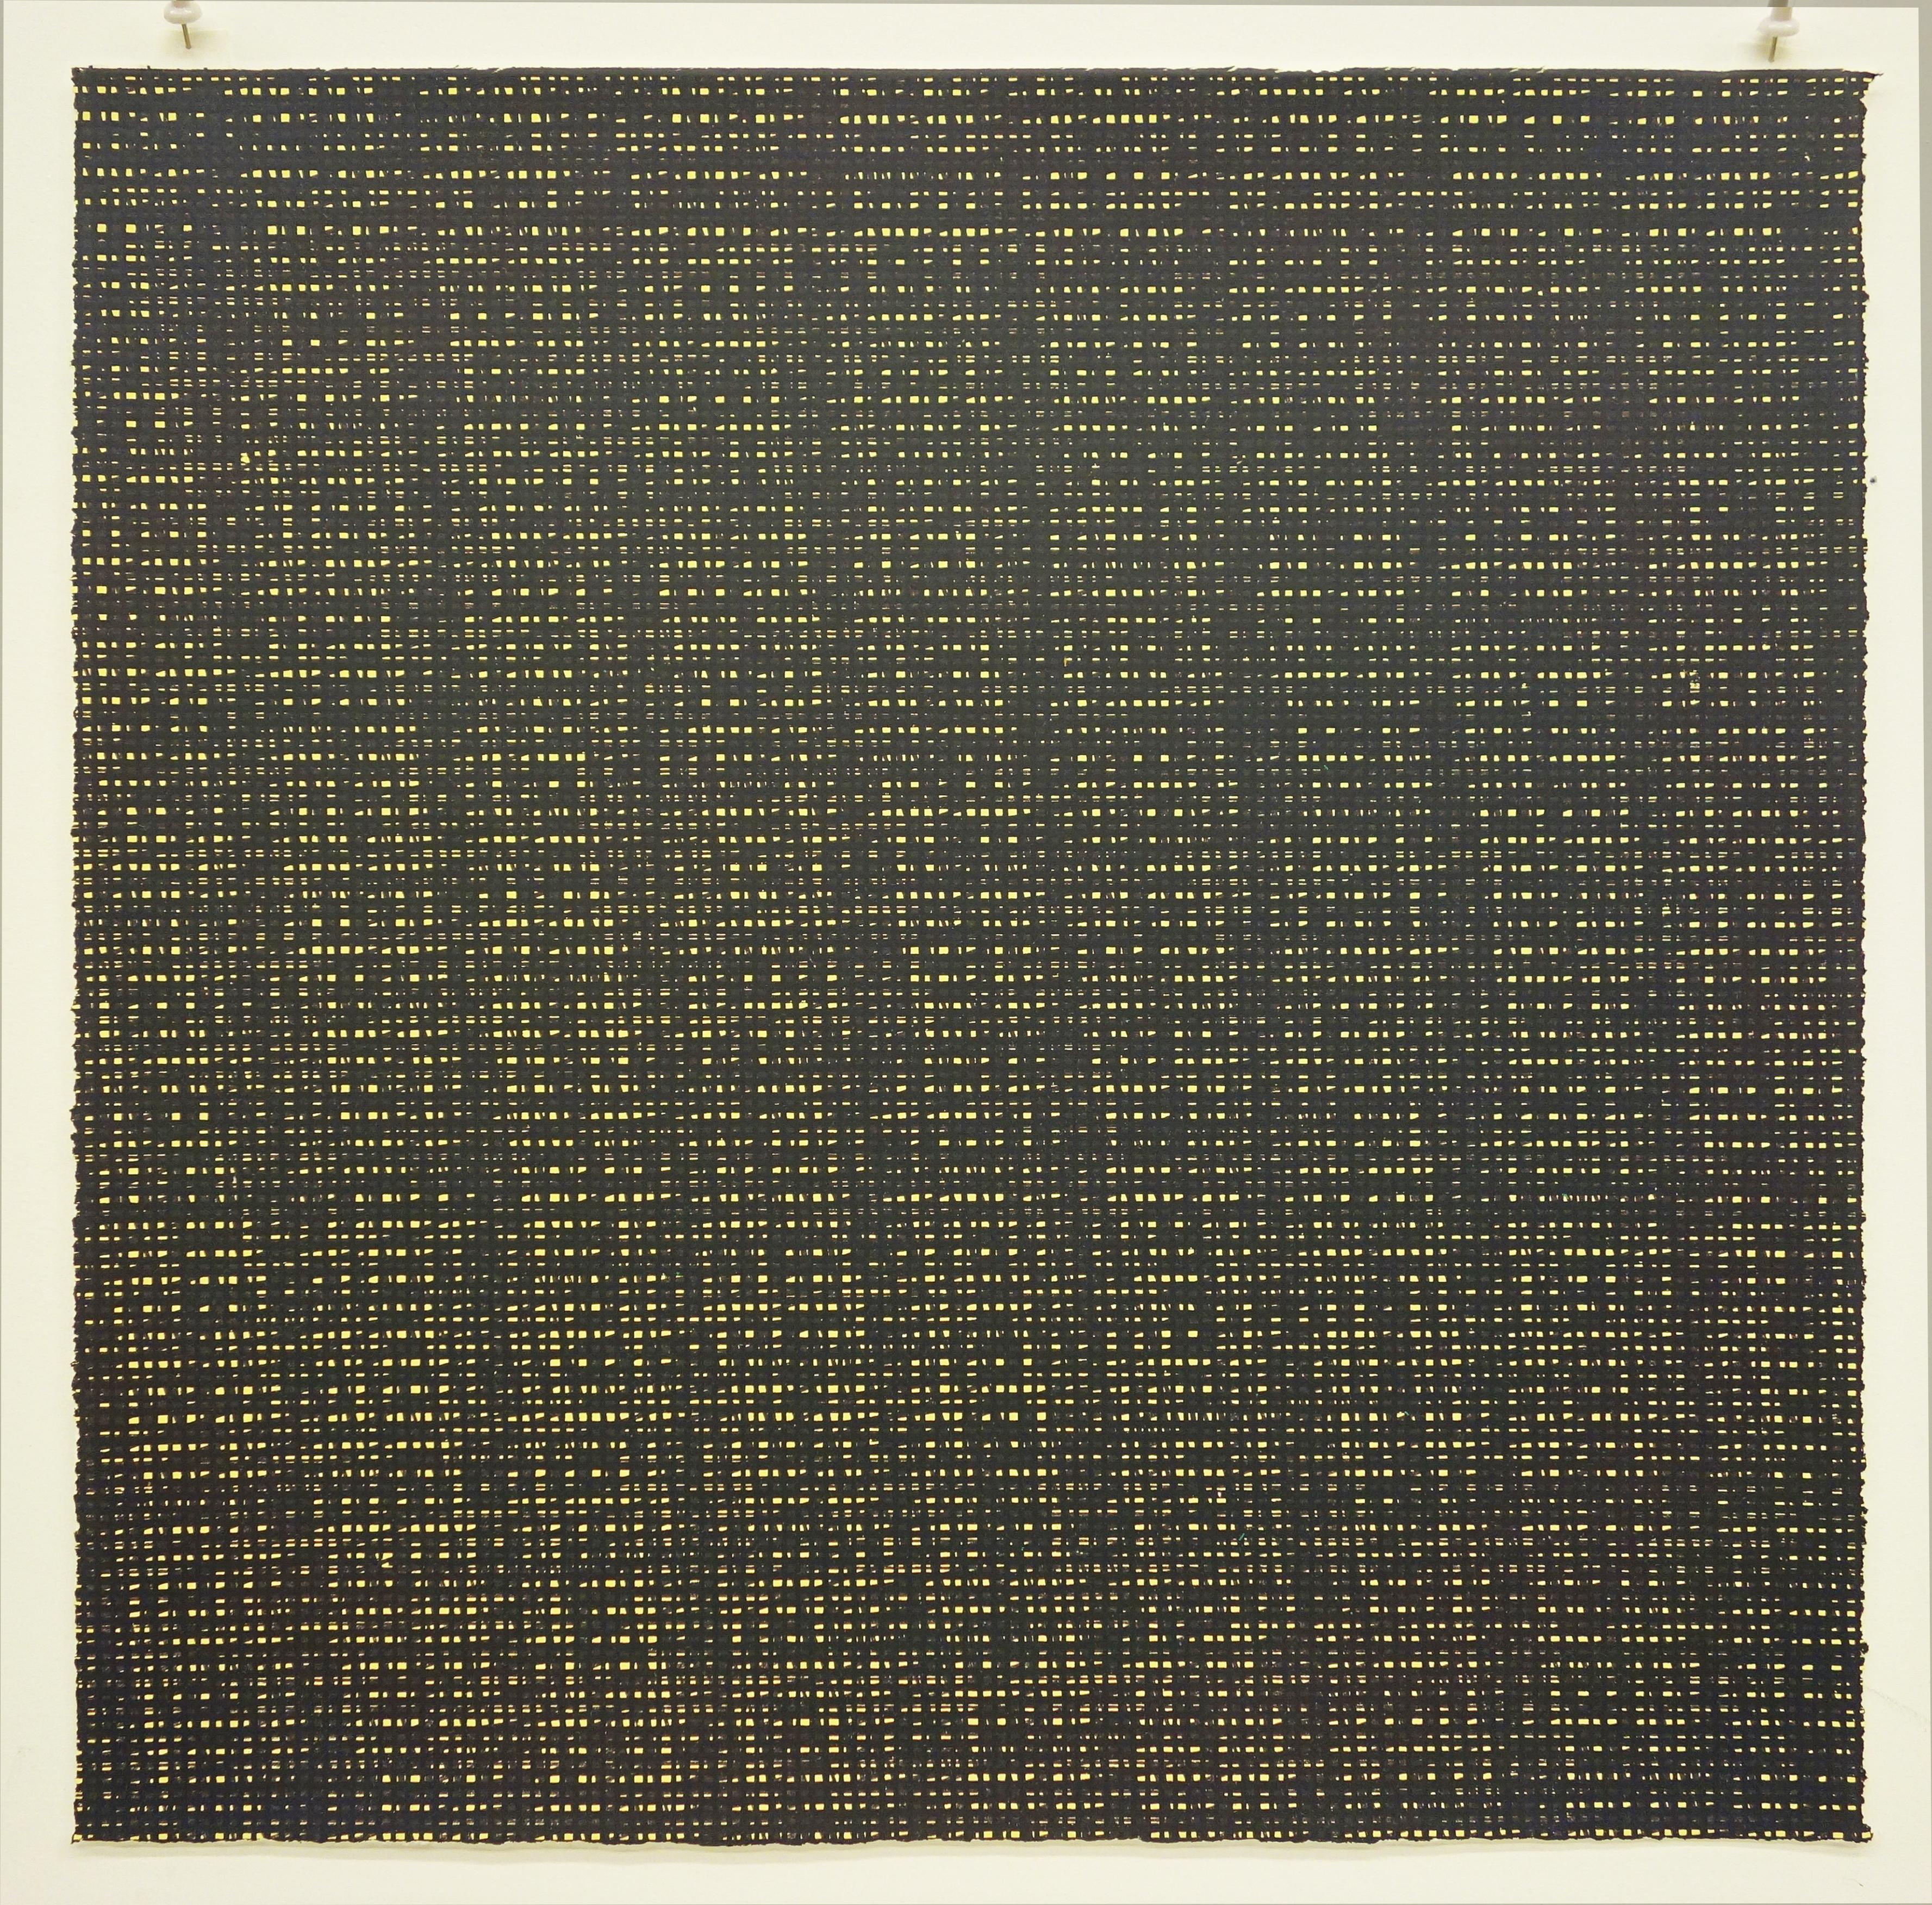 Rob de Oude, Untitled-Wassaic 8, 2016, silkscreen, 18 x 18 inches, Suite of 10 6